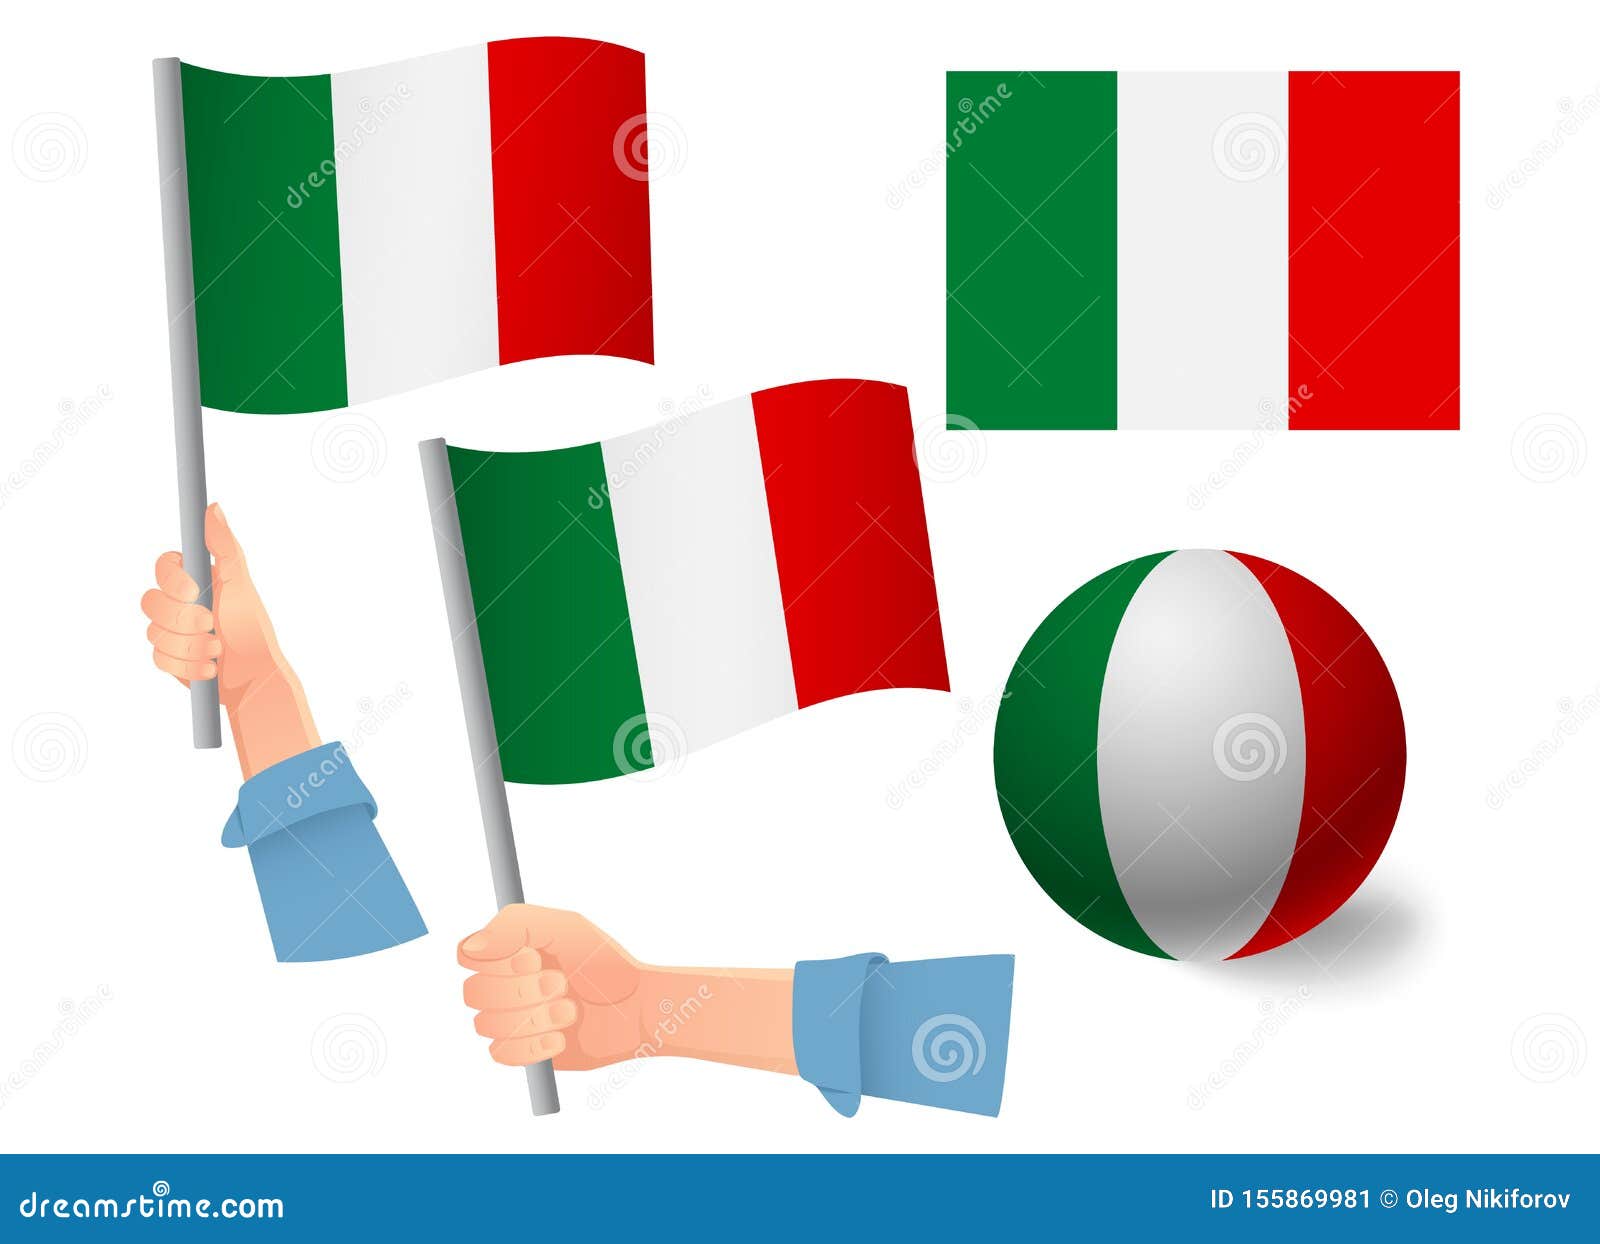 Italy flag in hand icon stock illustration. Illustration ...